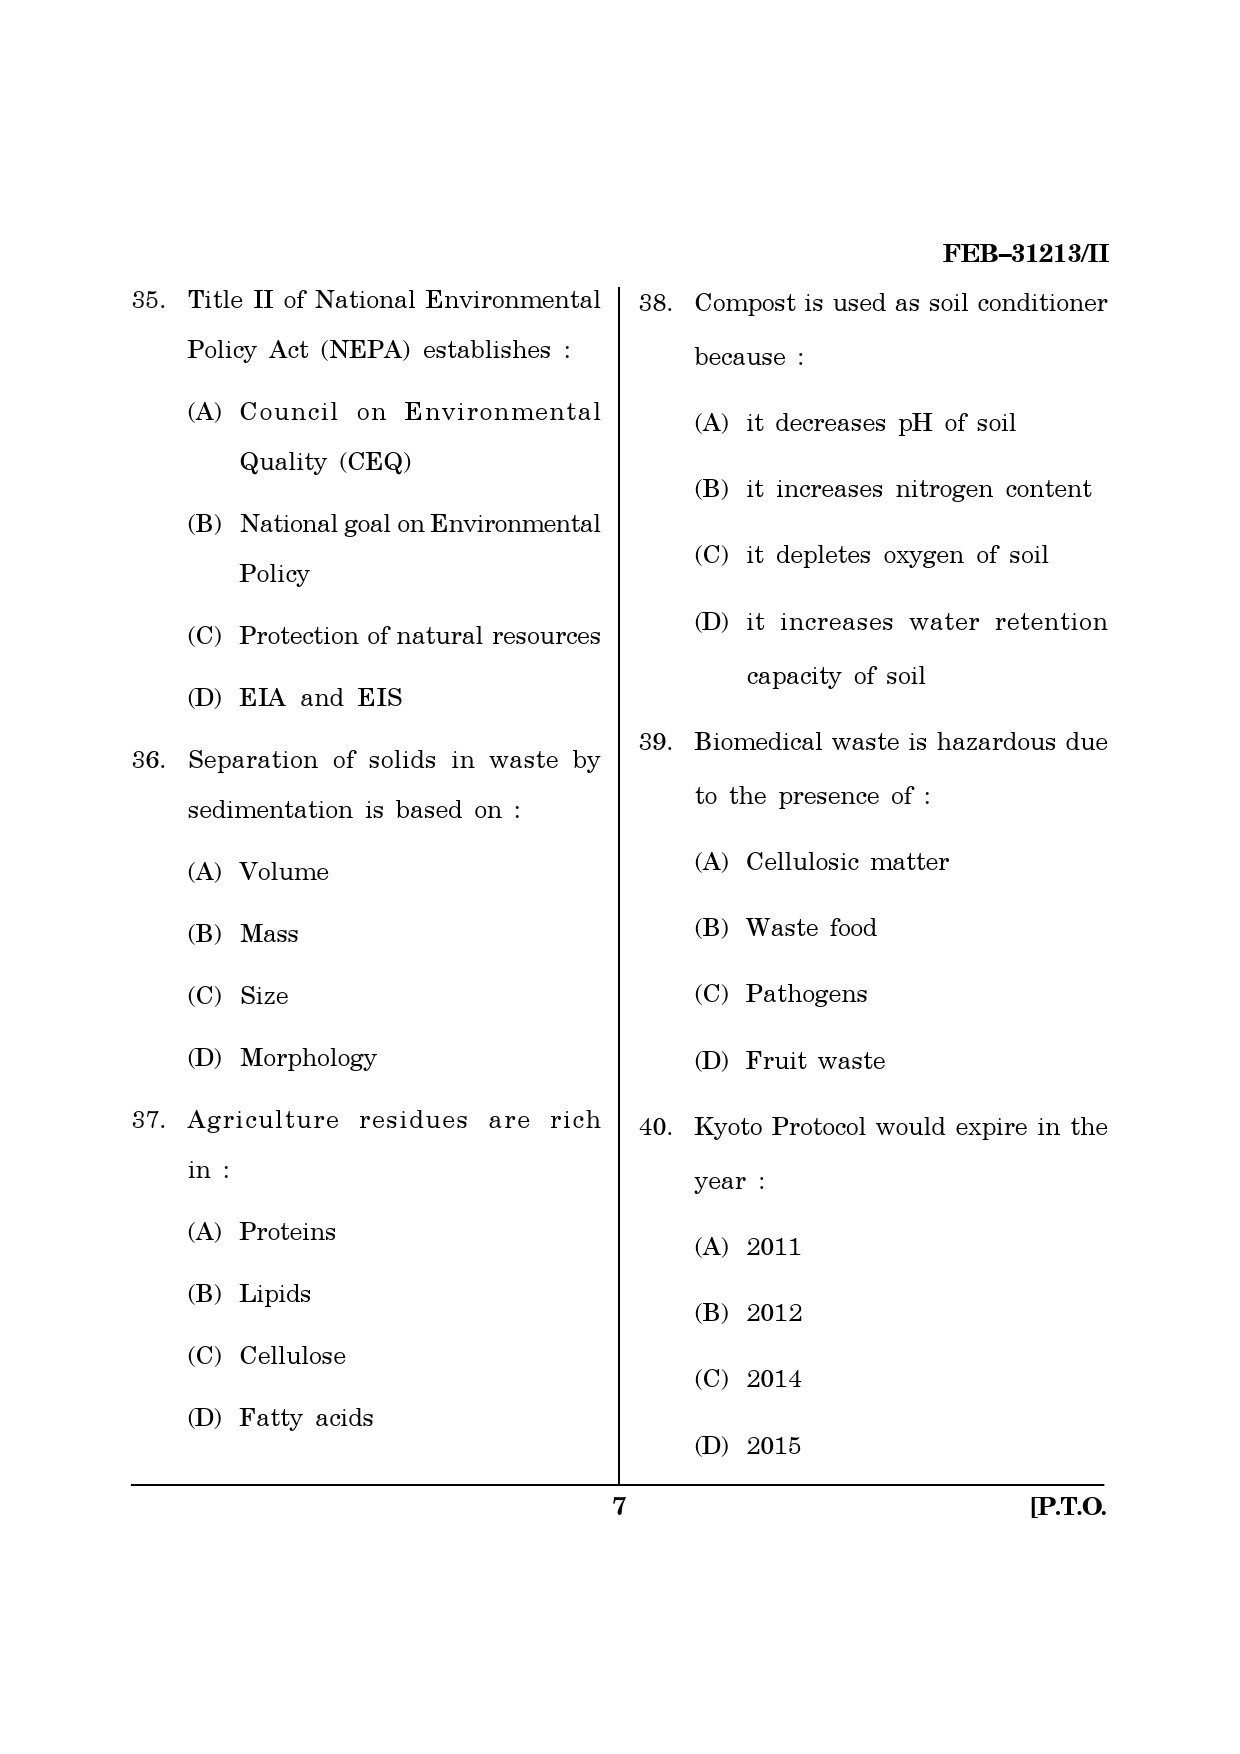 Maharashtra SET Environmental Sciences Question Paper II February 2013 7